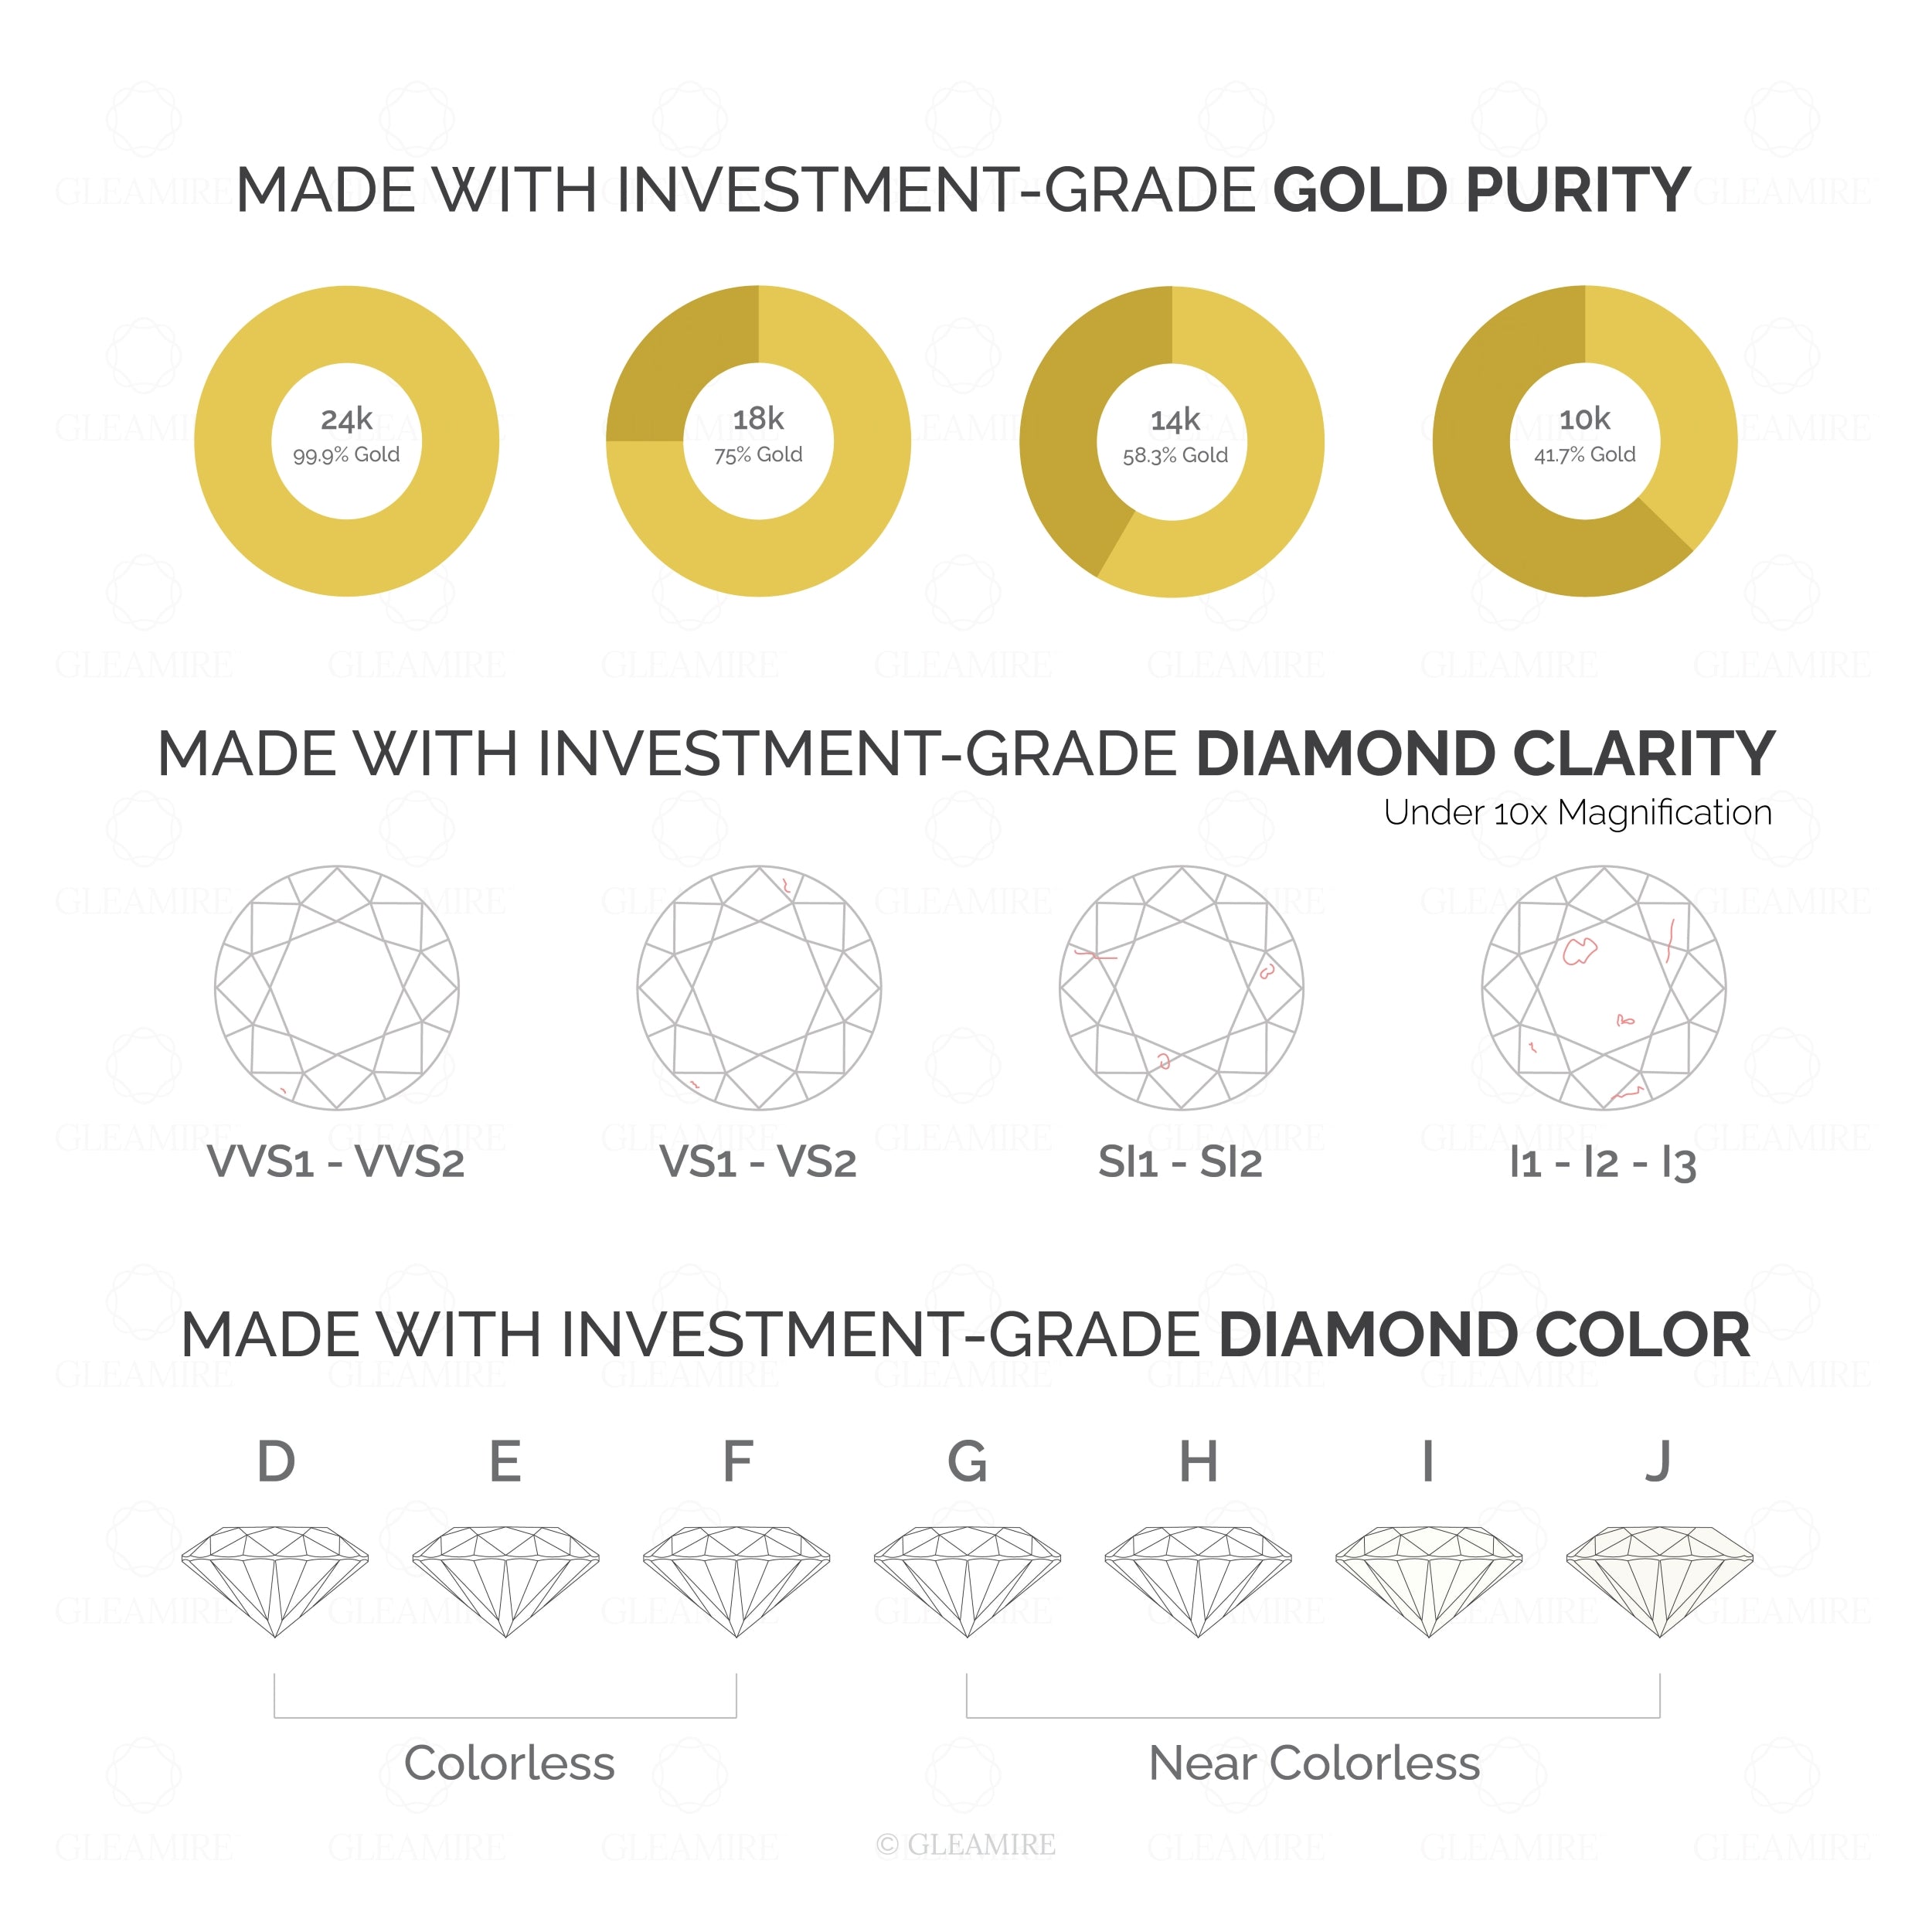 Certified 14K Gold 0.21ct Natural Diamond E-VVS Designer Heart Ball Yellow Necklace